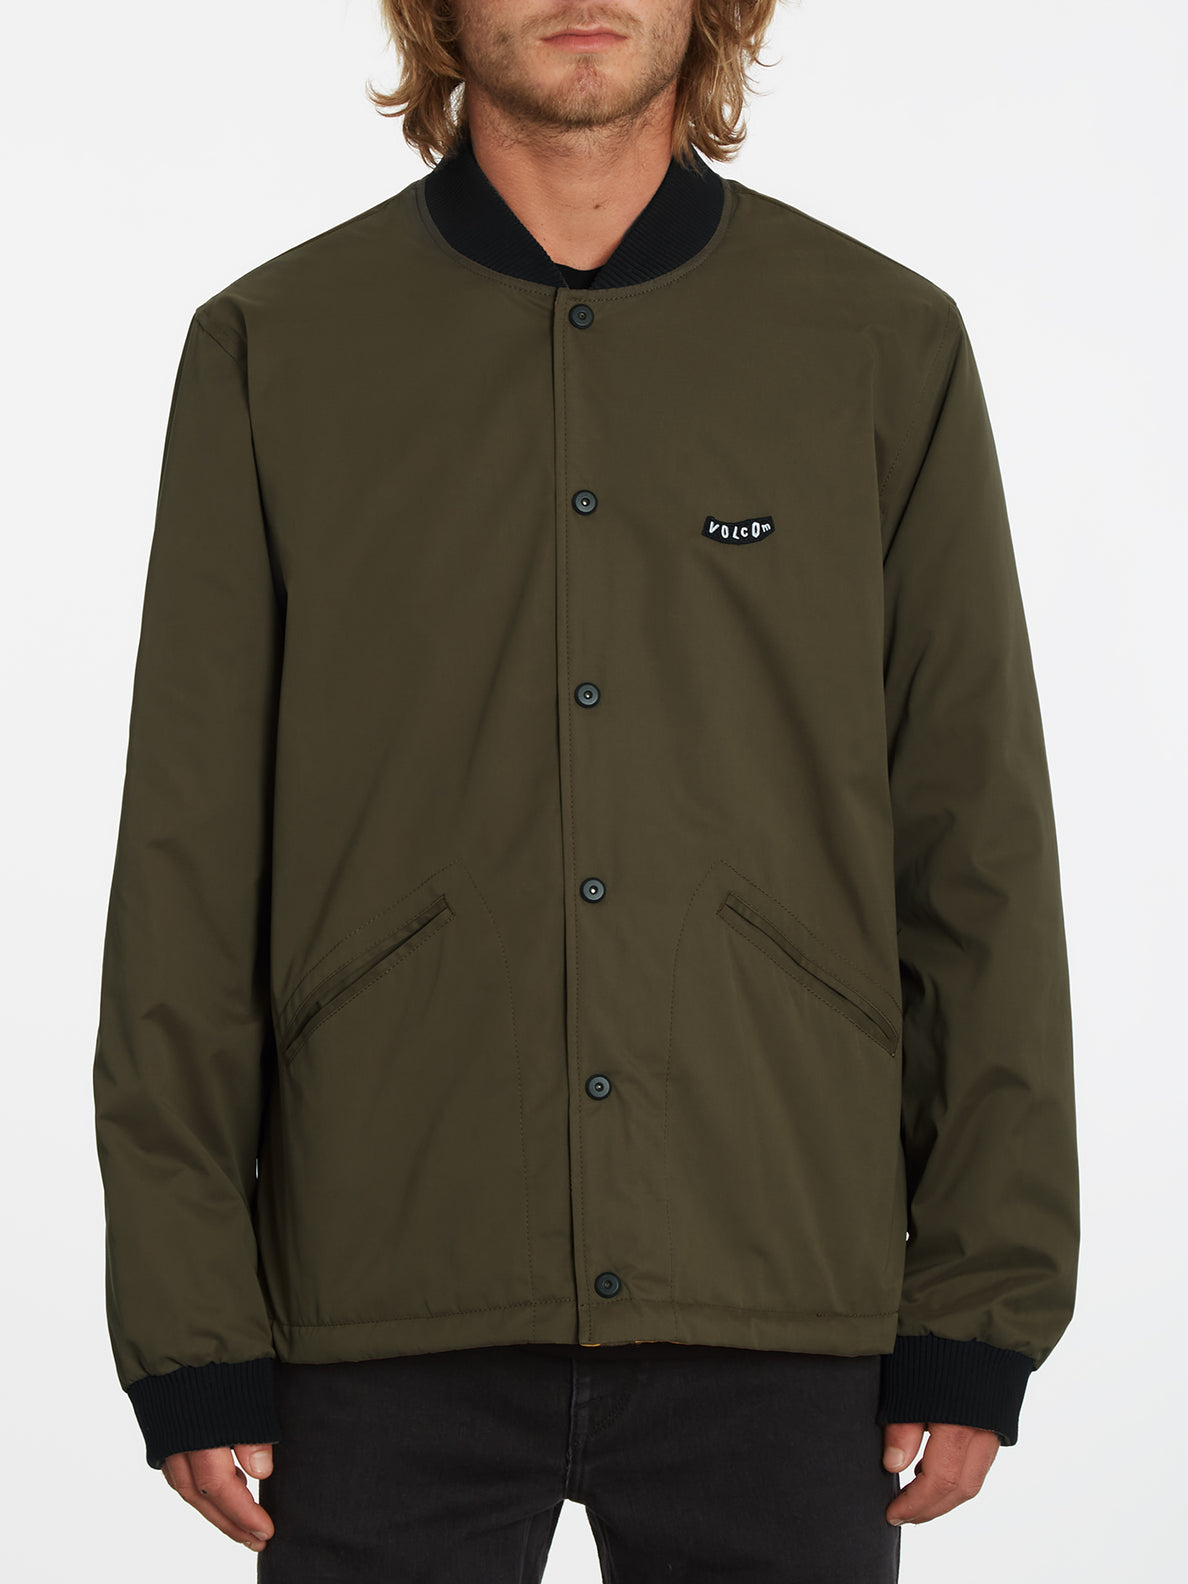 Lookster Jacket - Service Green (A1632007_SVG) [01]